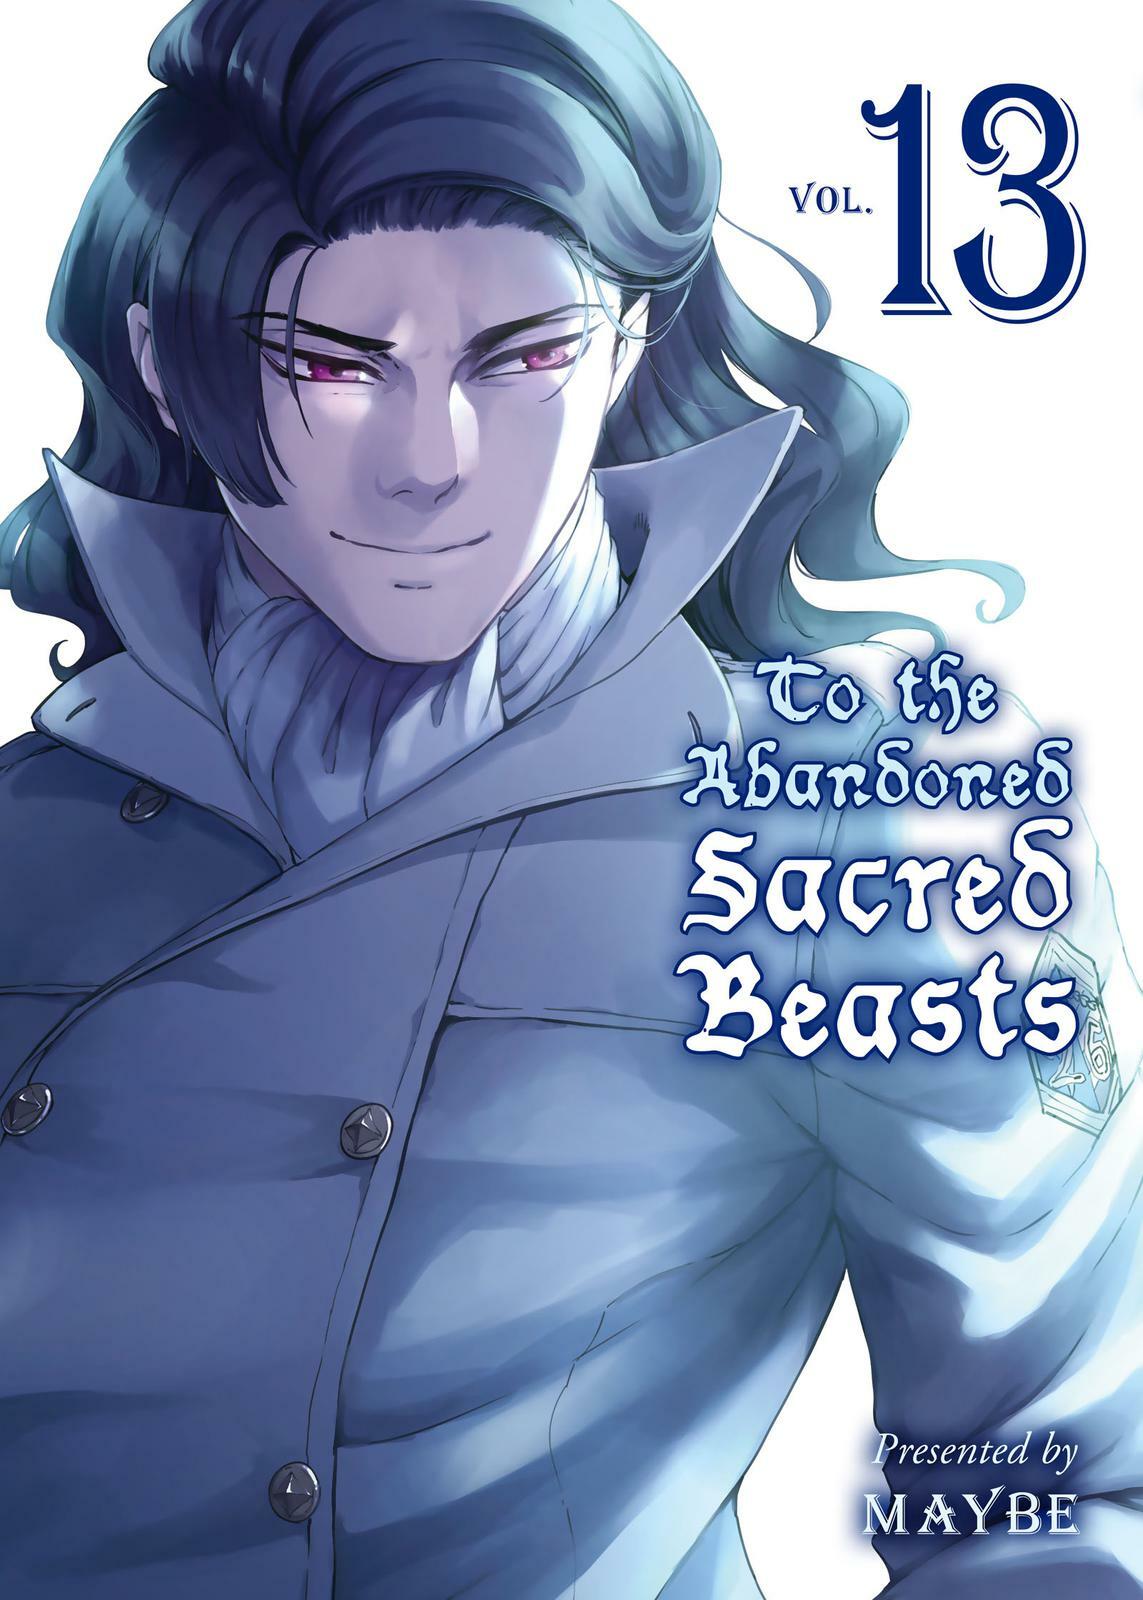 Read Katsute Kami Datta Kemonotachi E Vol.7 Side Story: The Winds Of  Hraesvelgr on Mangakakalot